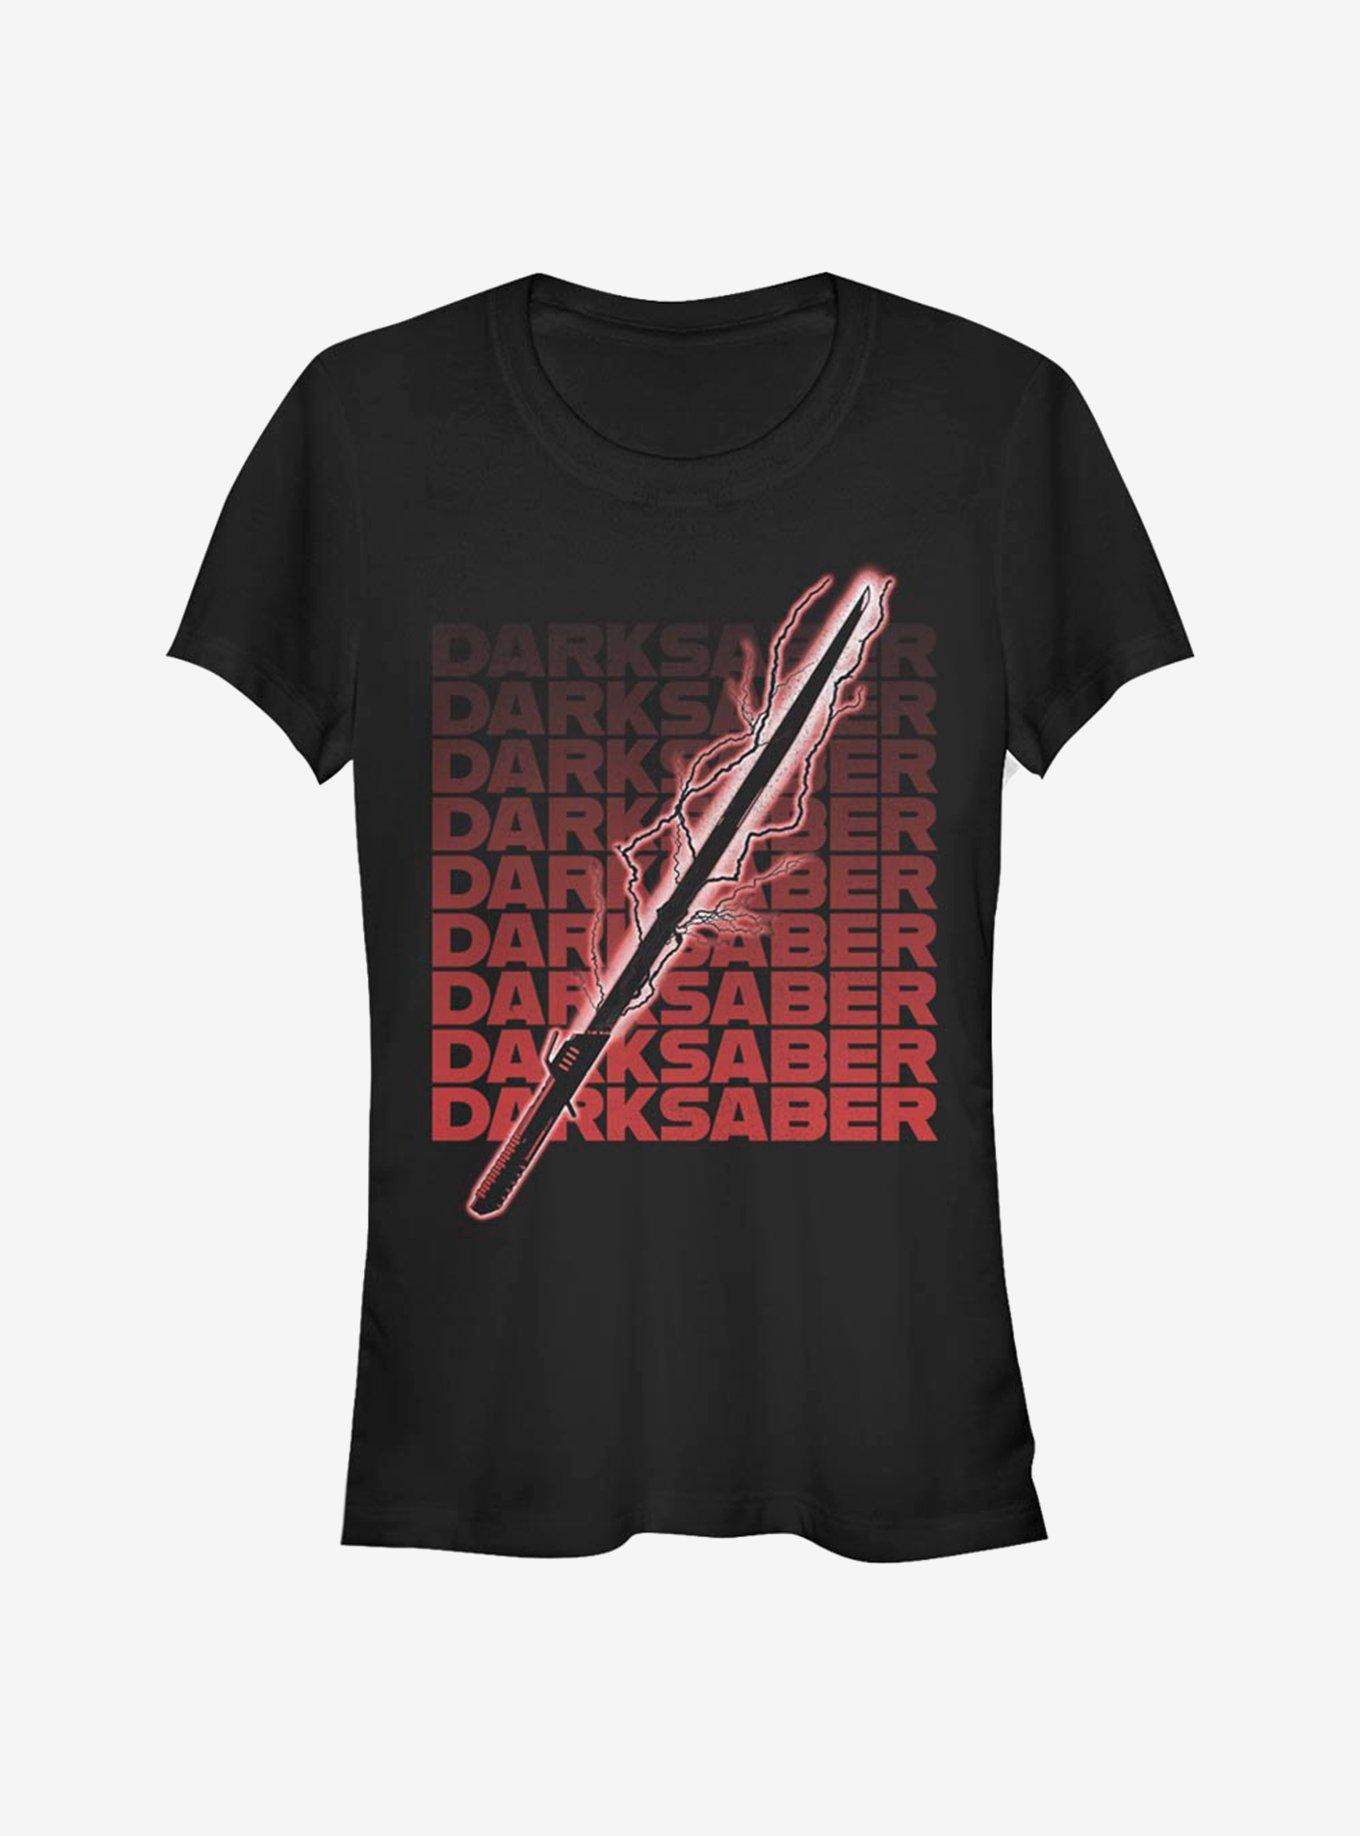 Star Wars The Mandalorian Darksaber Text Girls T-Shirt, BLACK, hi-res